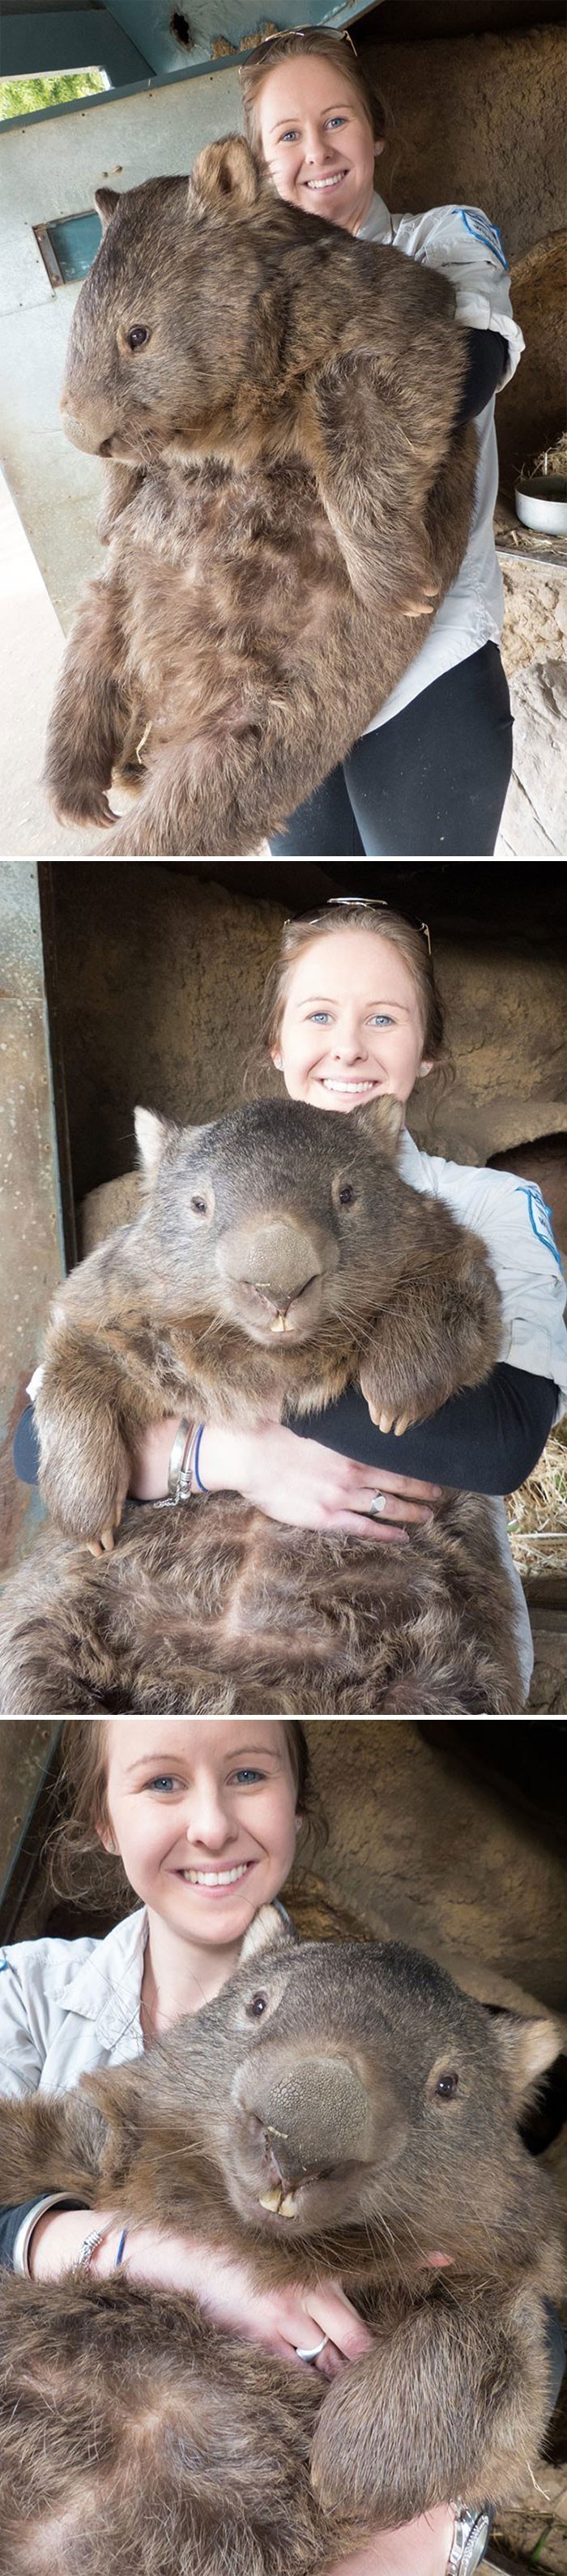 Rozmiar tego wombata